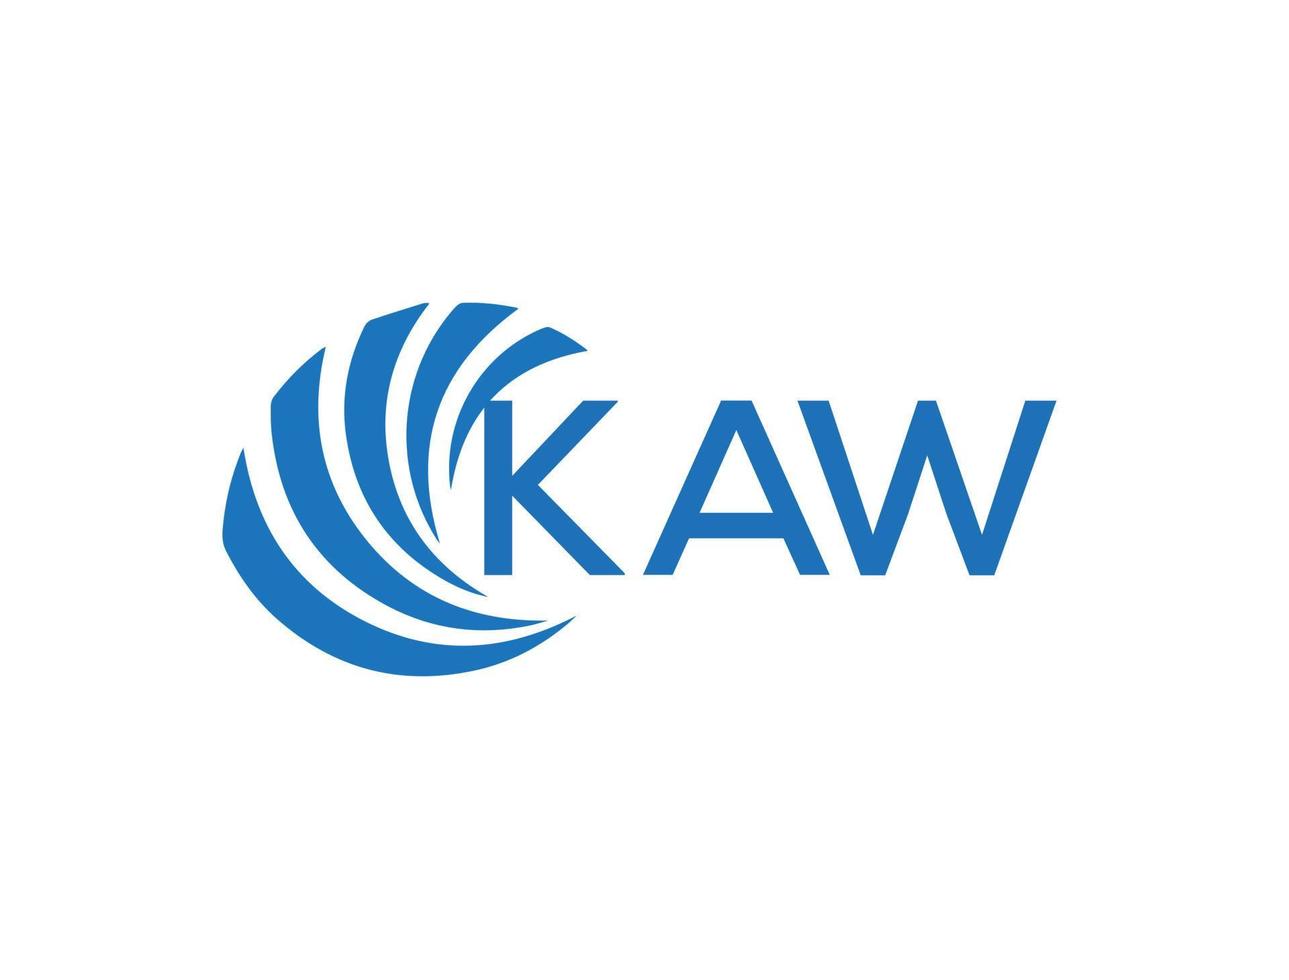 kaw resumen negocio crecimiento logo diseño en blanco antecedentes. kaw creativo iniciales letra logo concepto. vector